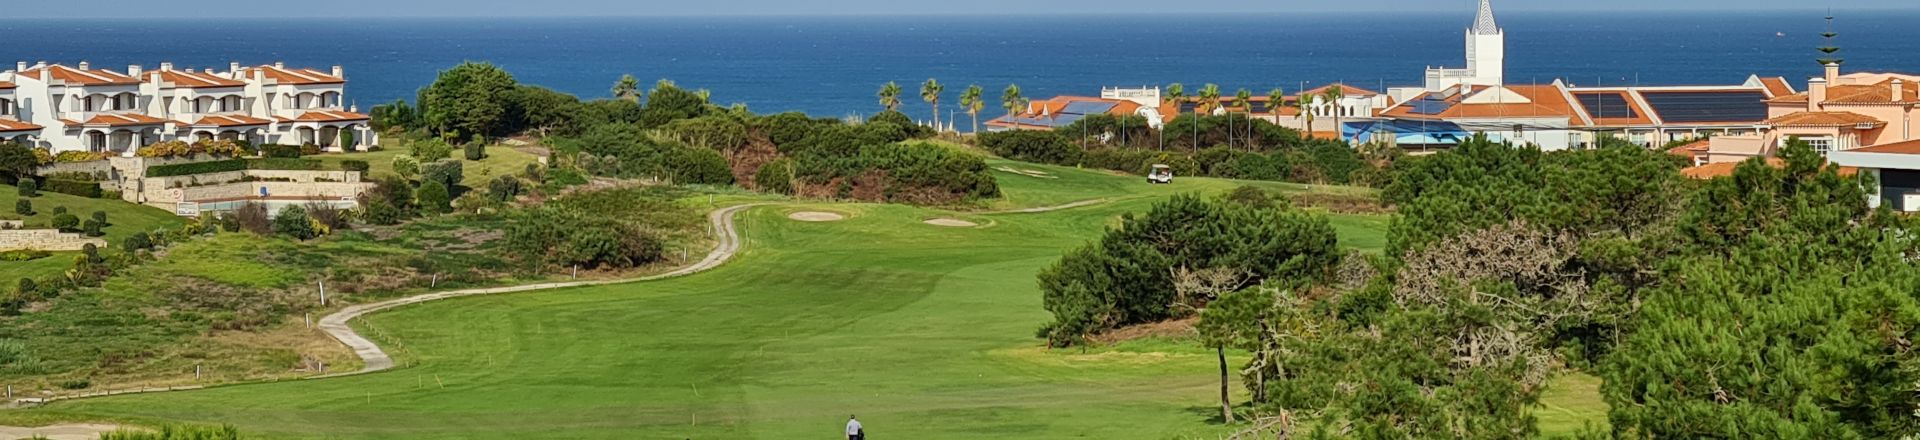 Golf Holidays in Lisbon at the Praia del Rey.